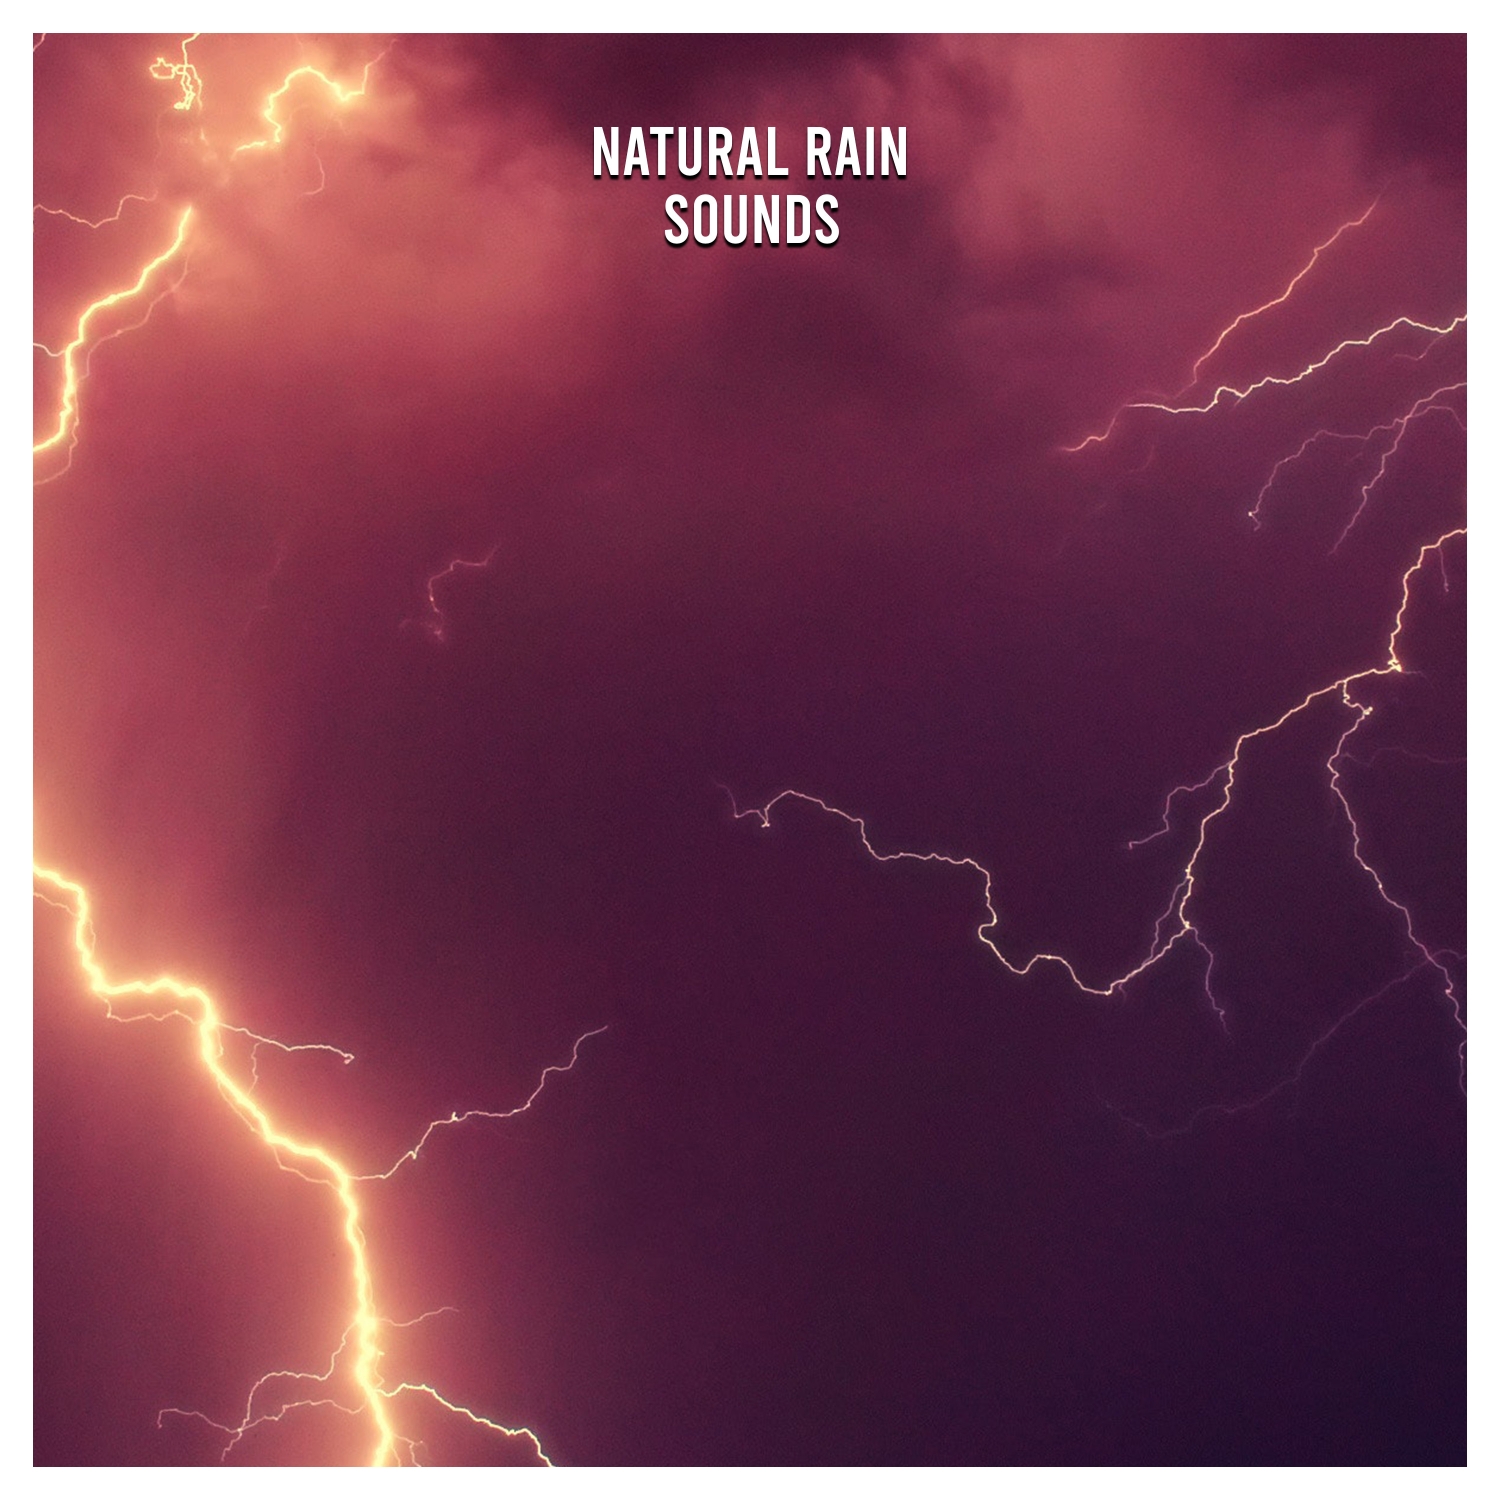 16 New Natural Rain Sounds